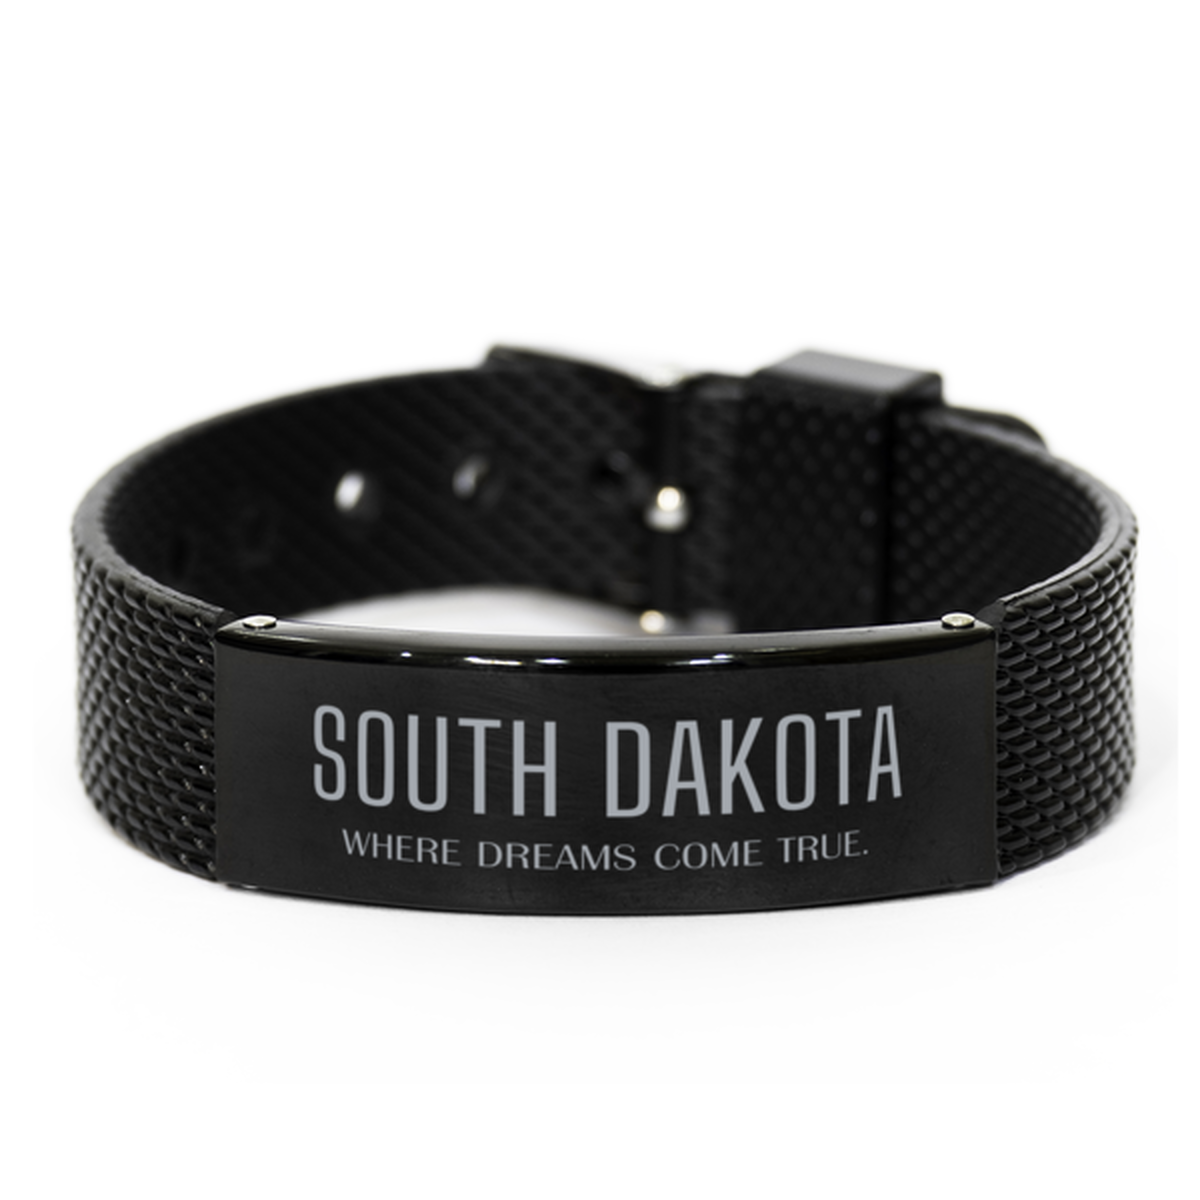 Love South Dakota State Black Shark Mesh Bracelet, South Dakota Where dreams come true, Birthday Inspirational Gifts For South Dakota Men, Women, Friends